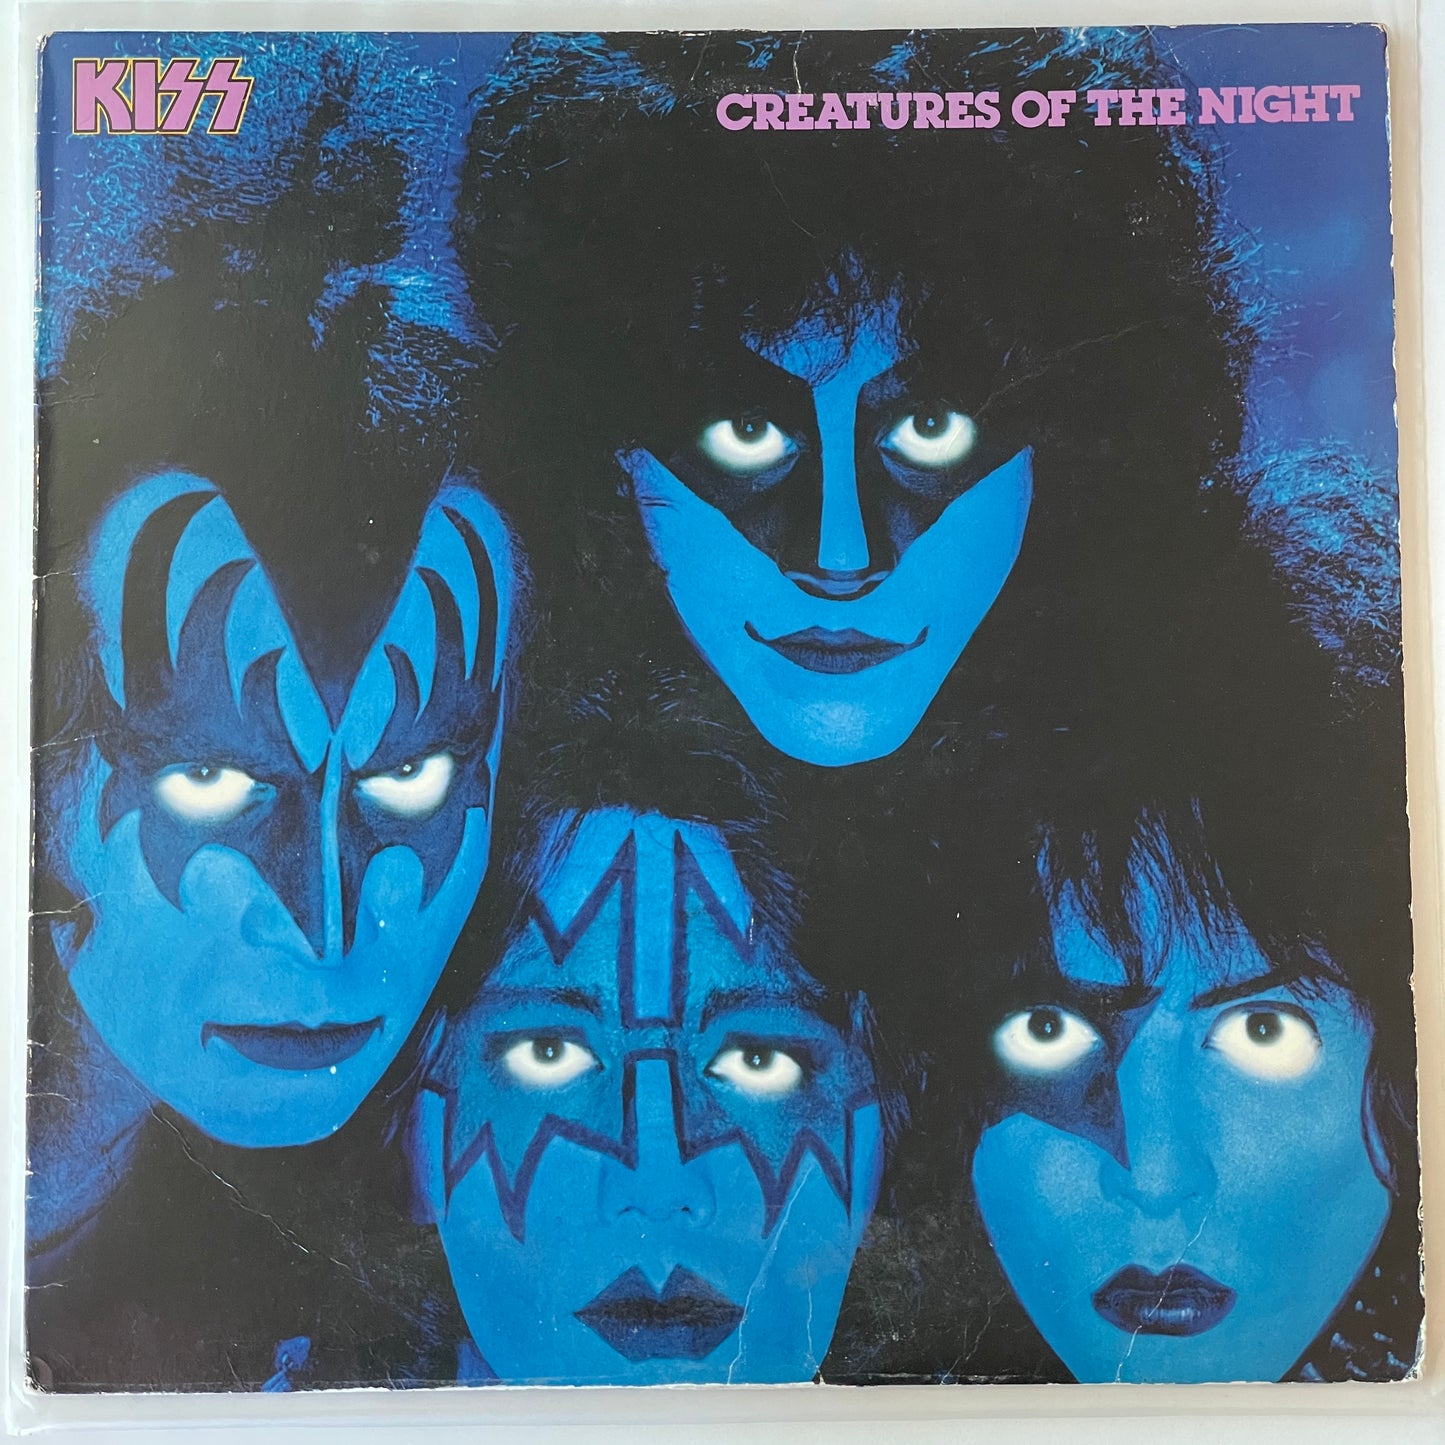 KISS - Creatures of the Night original LP (used)